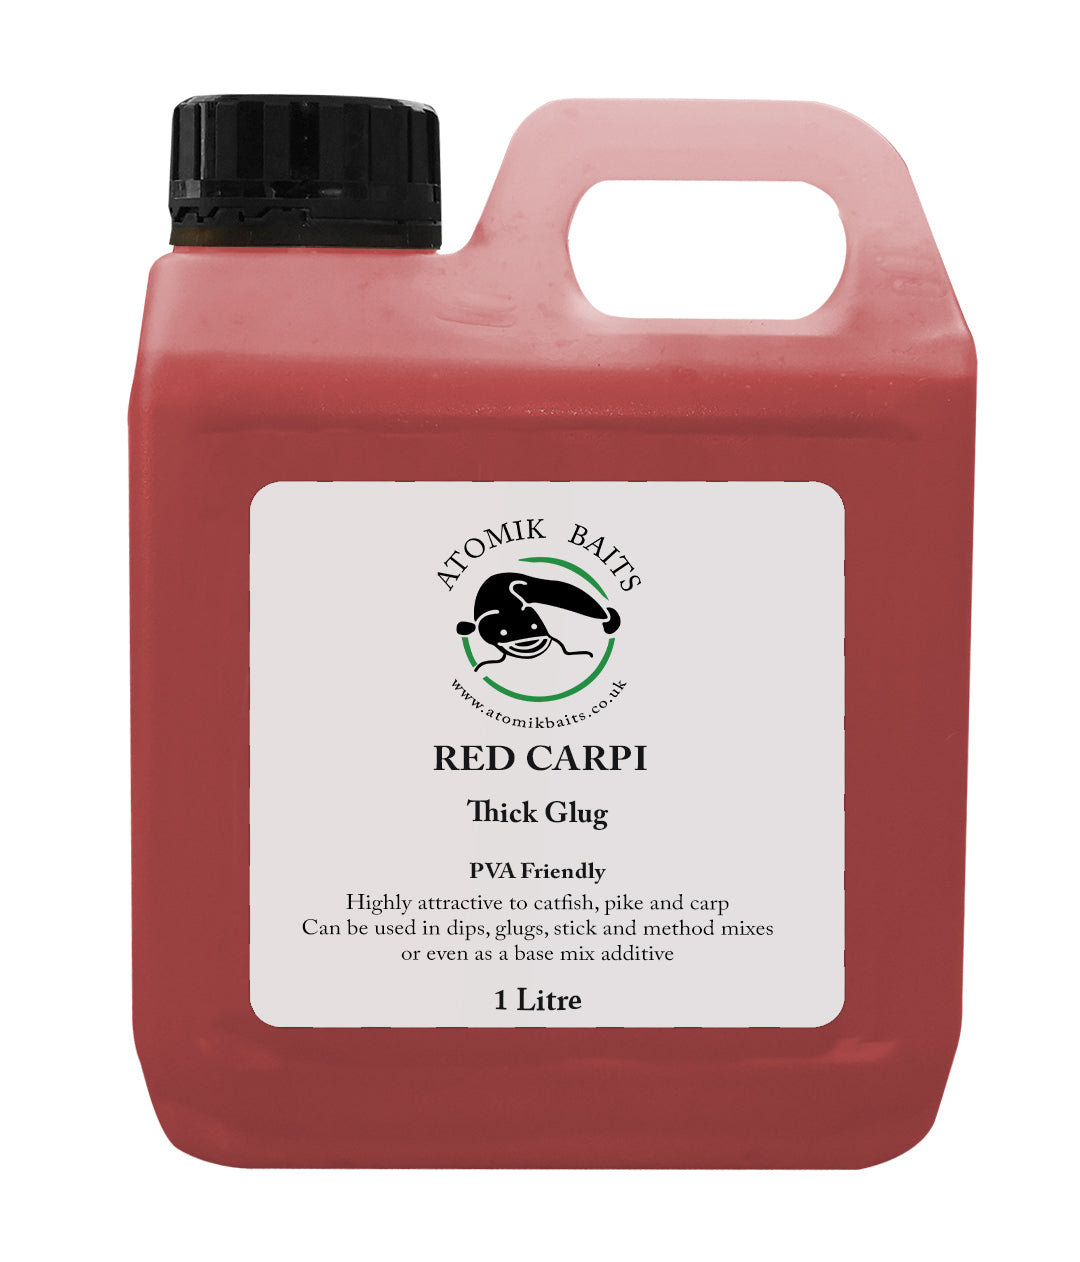 Red Carpi - Glug, Particle Feed, Liquid Additive, Dip -1 Litre 1000ml